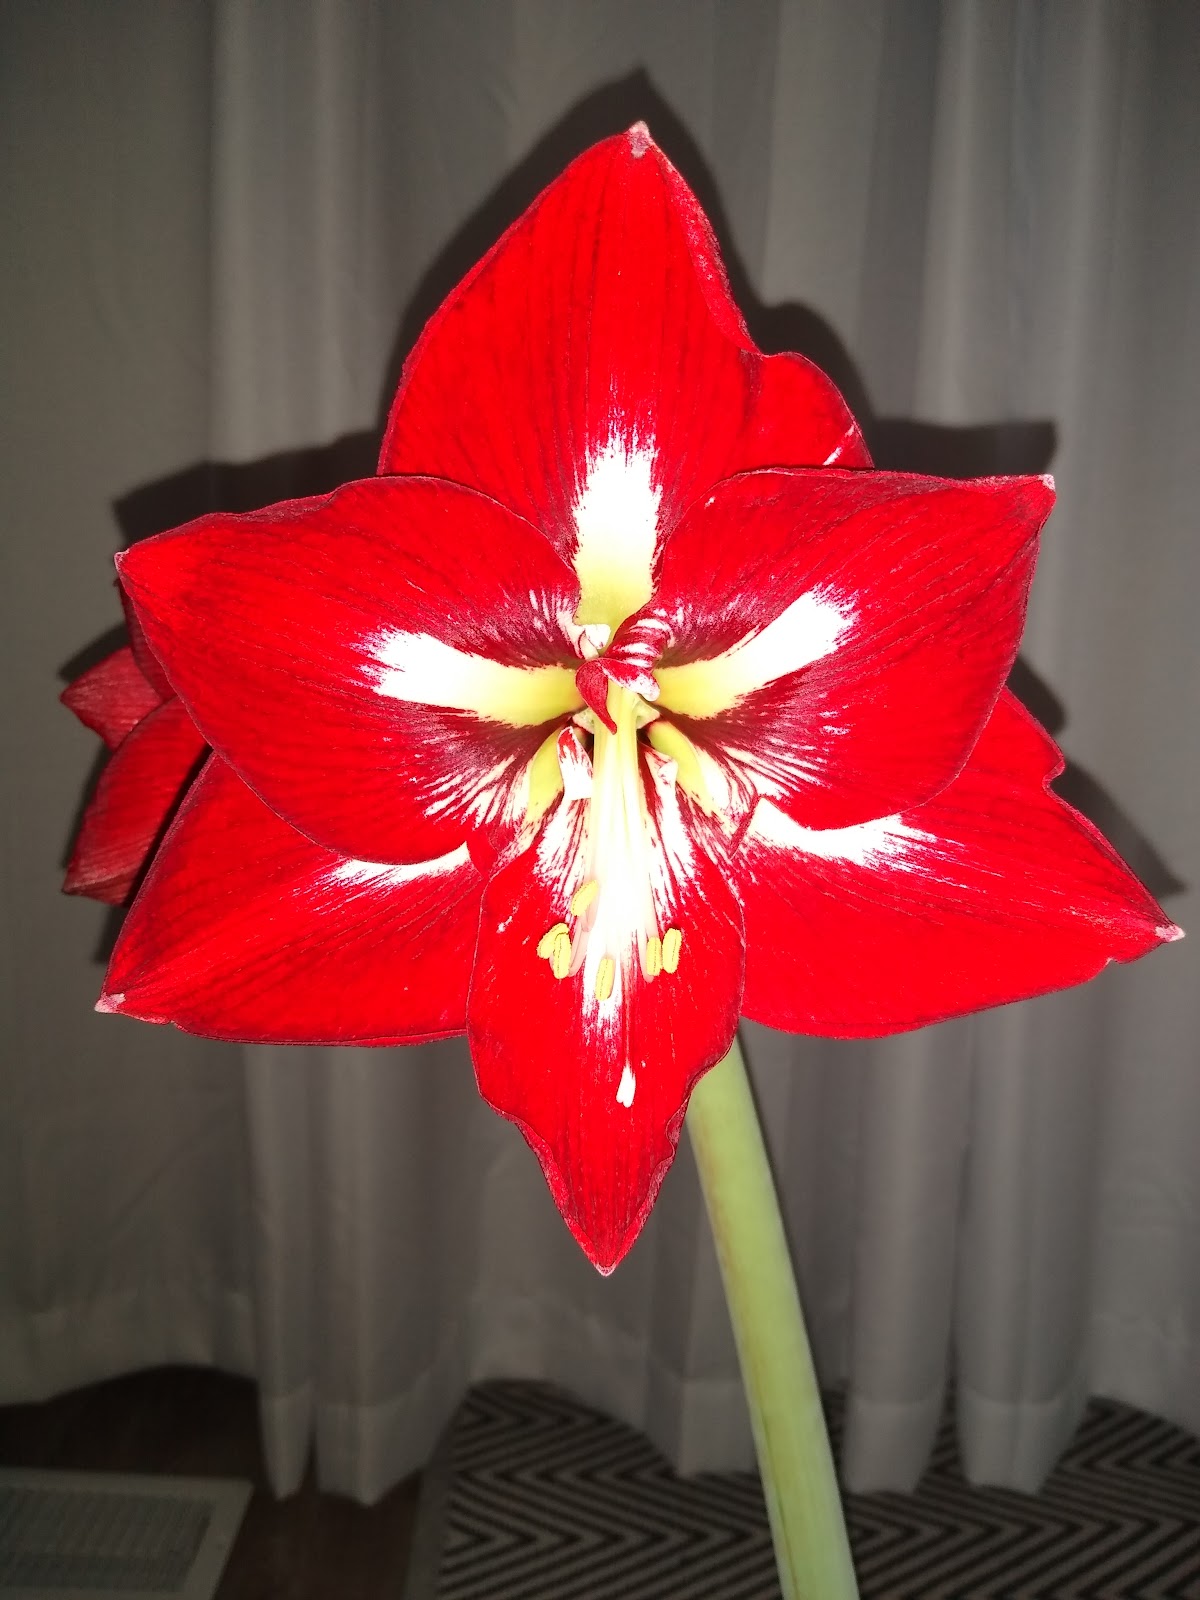 red amaryllis flower